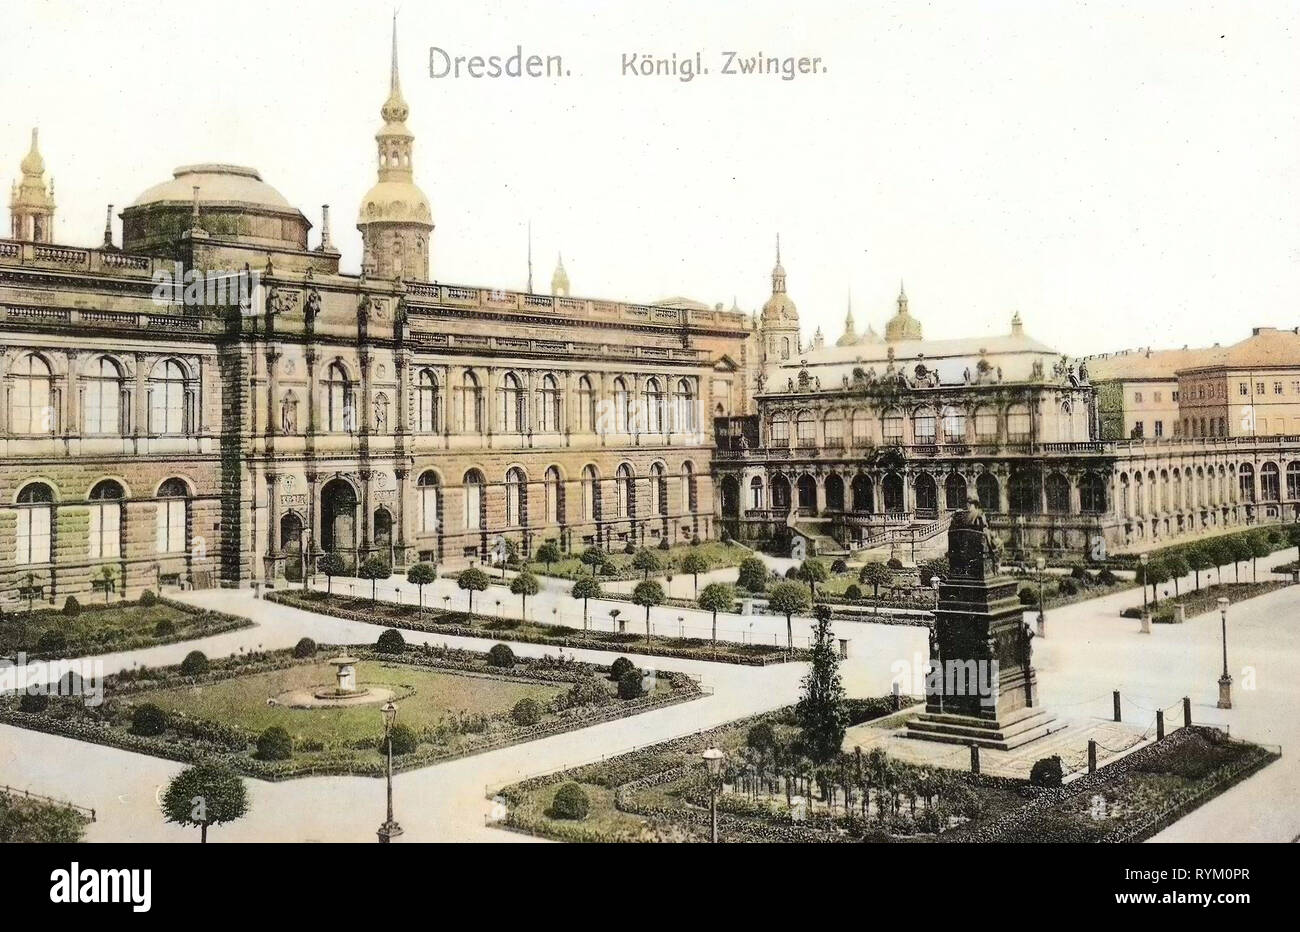 Zwinger, Dresden, 1906, Königlicher Zwinger, Innenhof, Germany Stock Photo